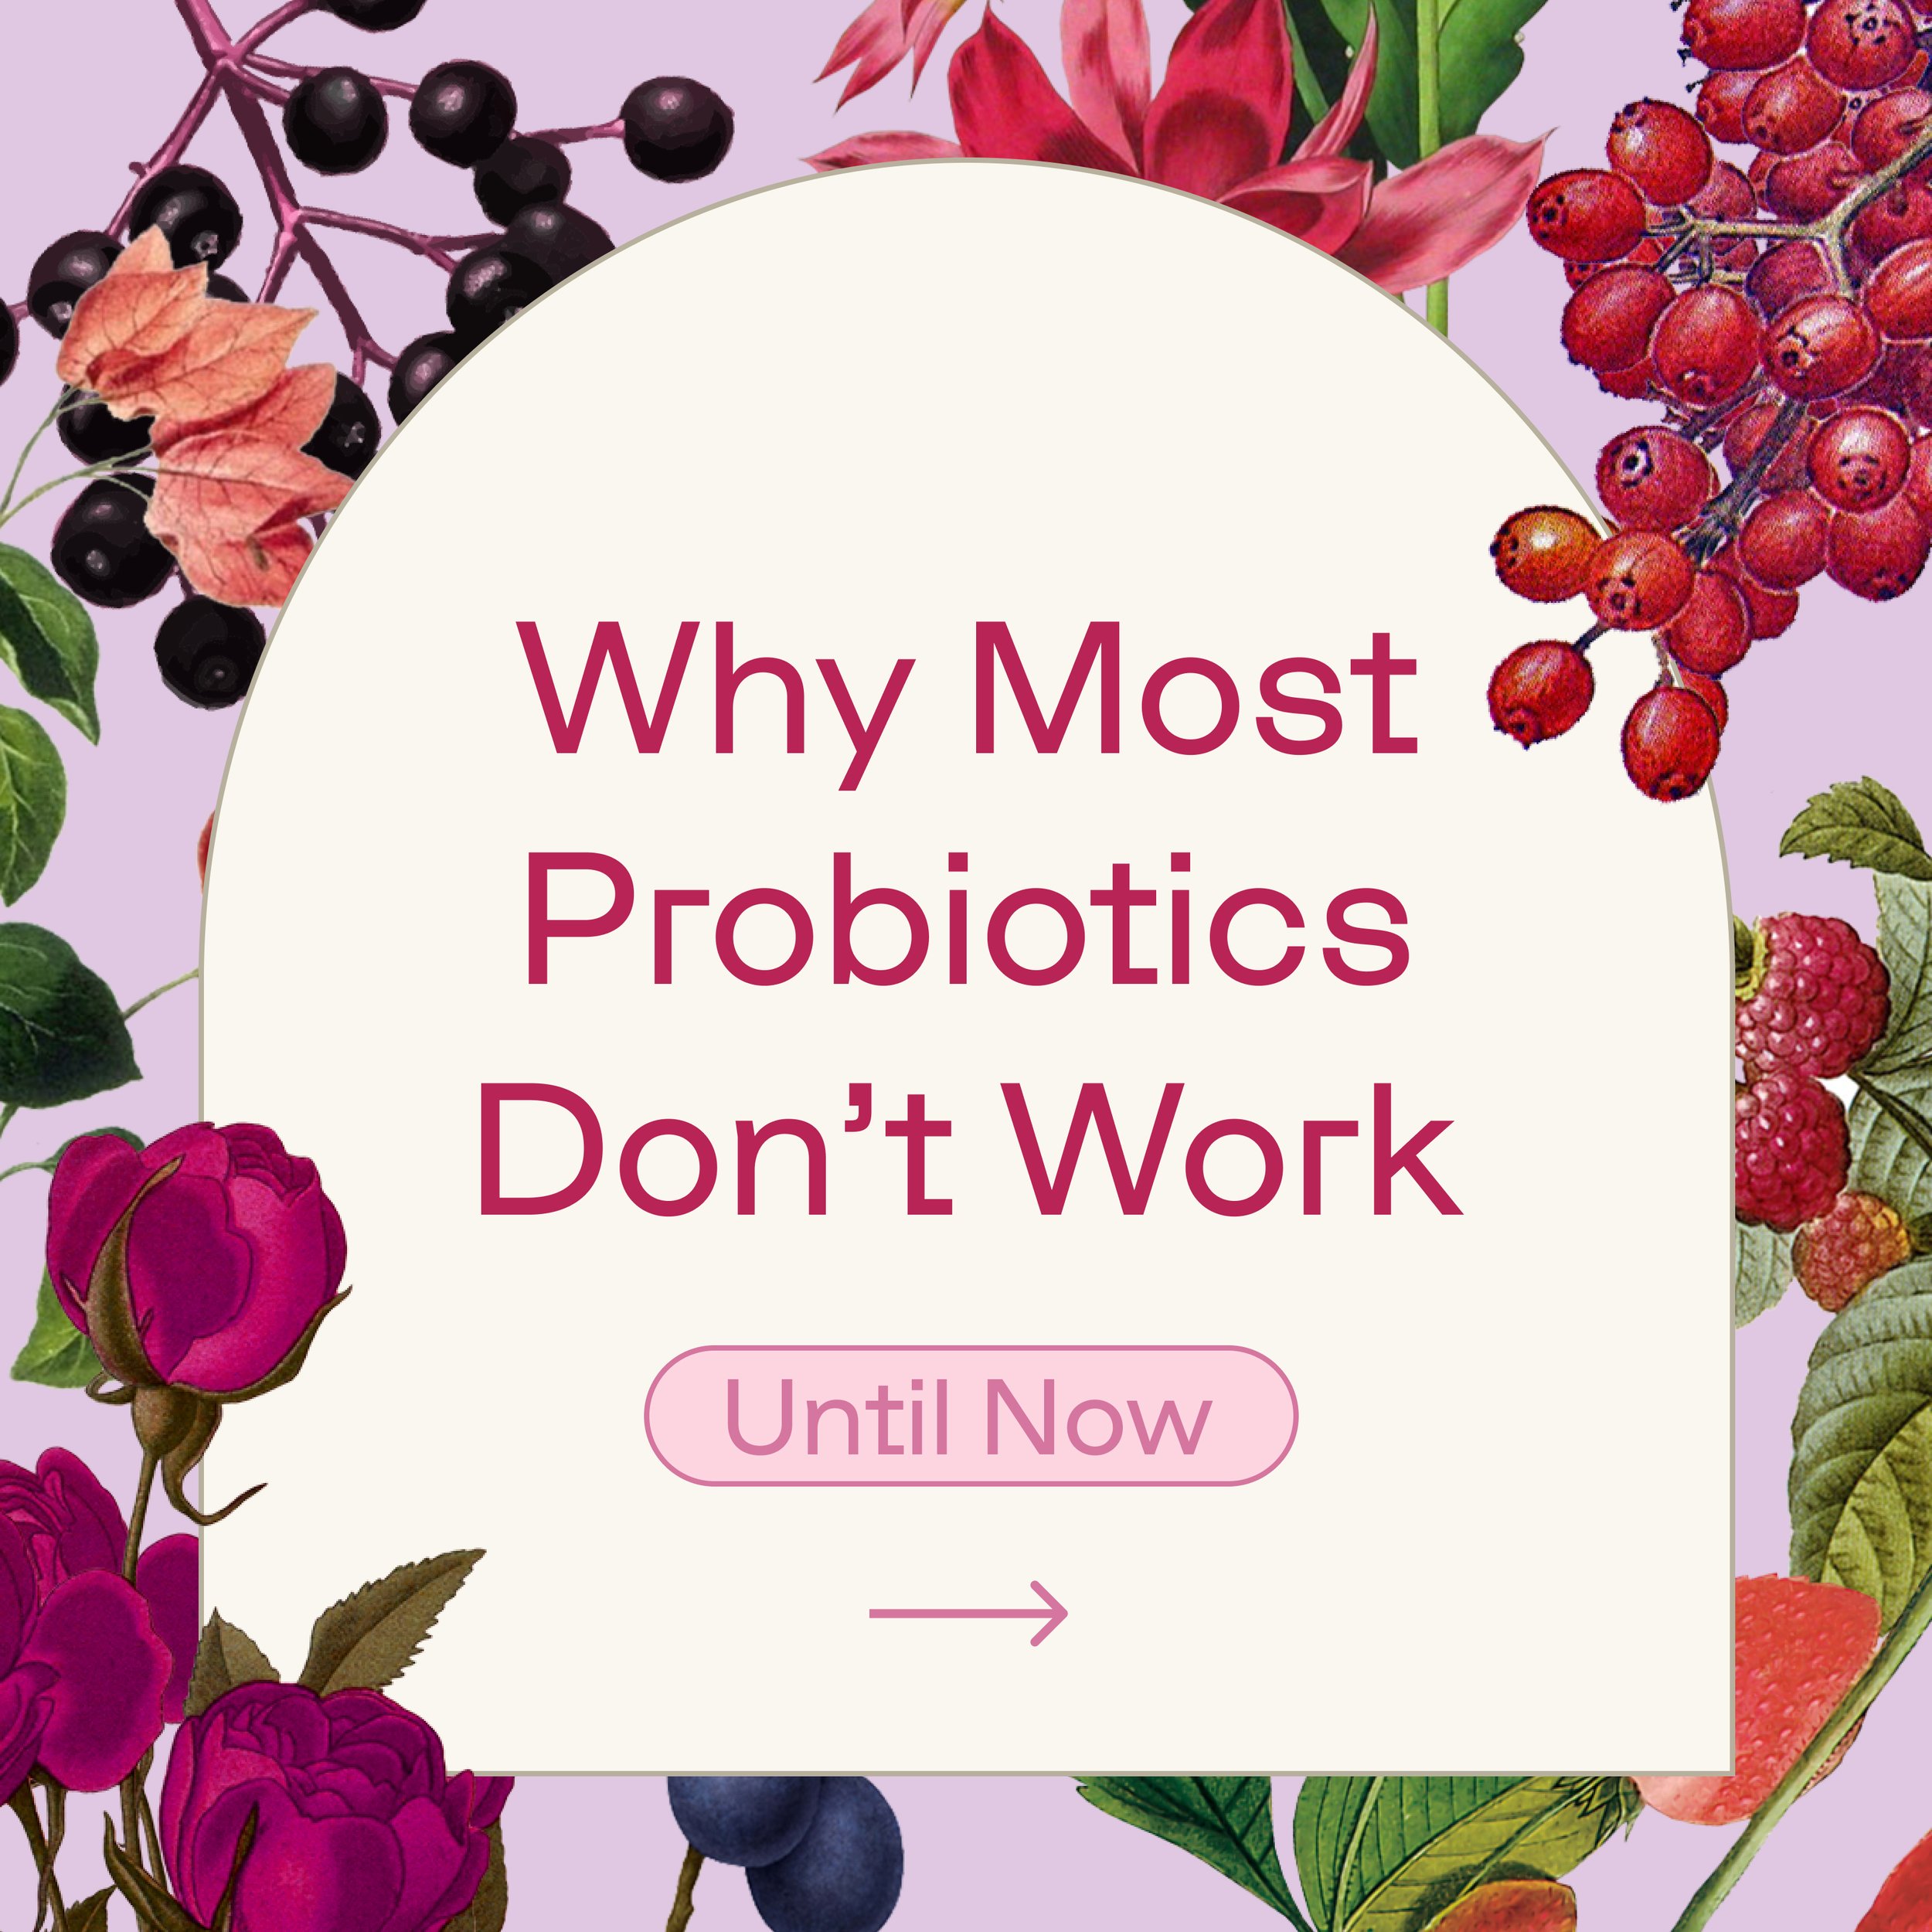 FLO22_DESIGNS_Why Most Probiotics Don't Work 1.jpg